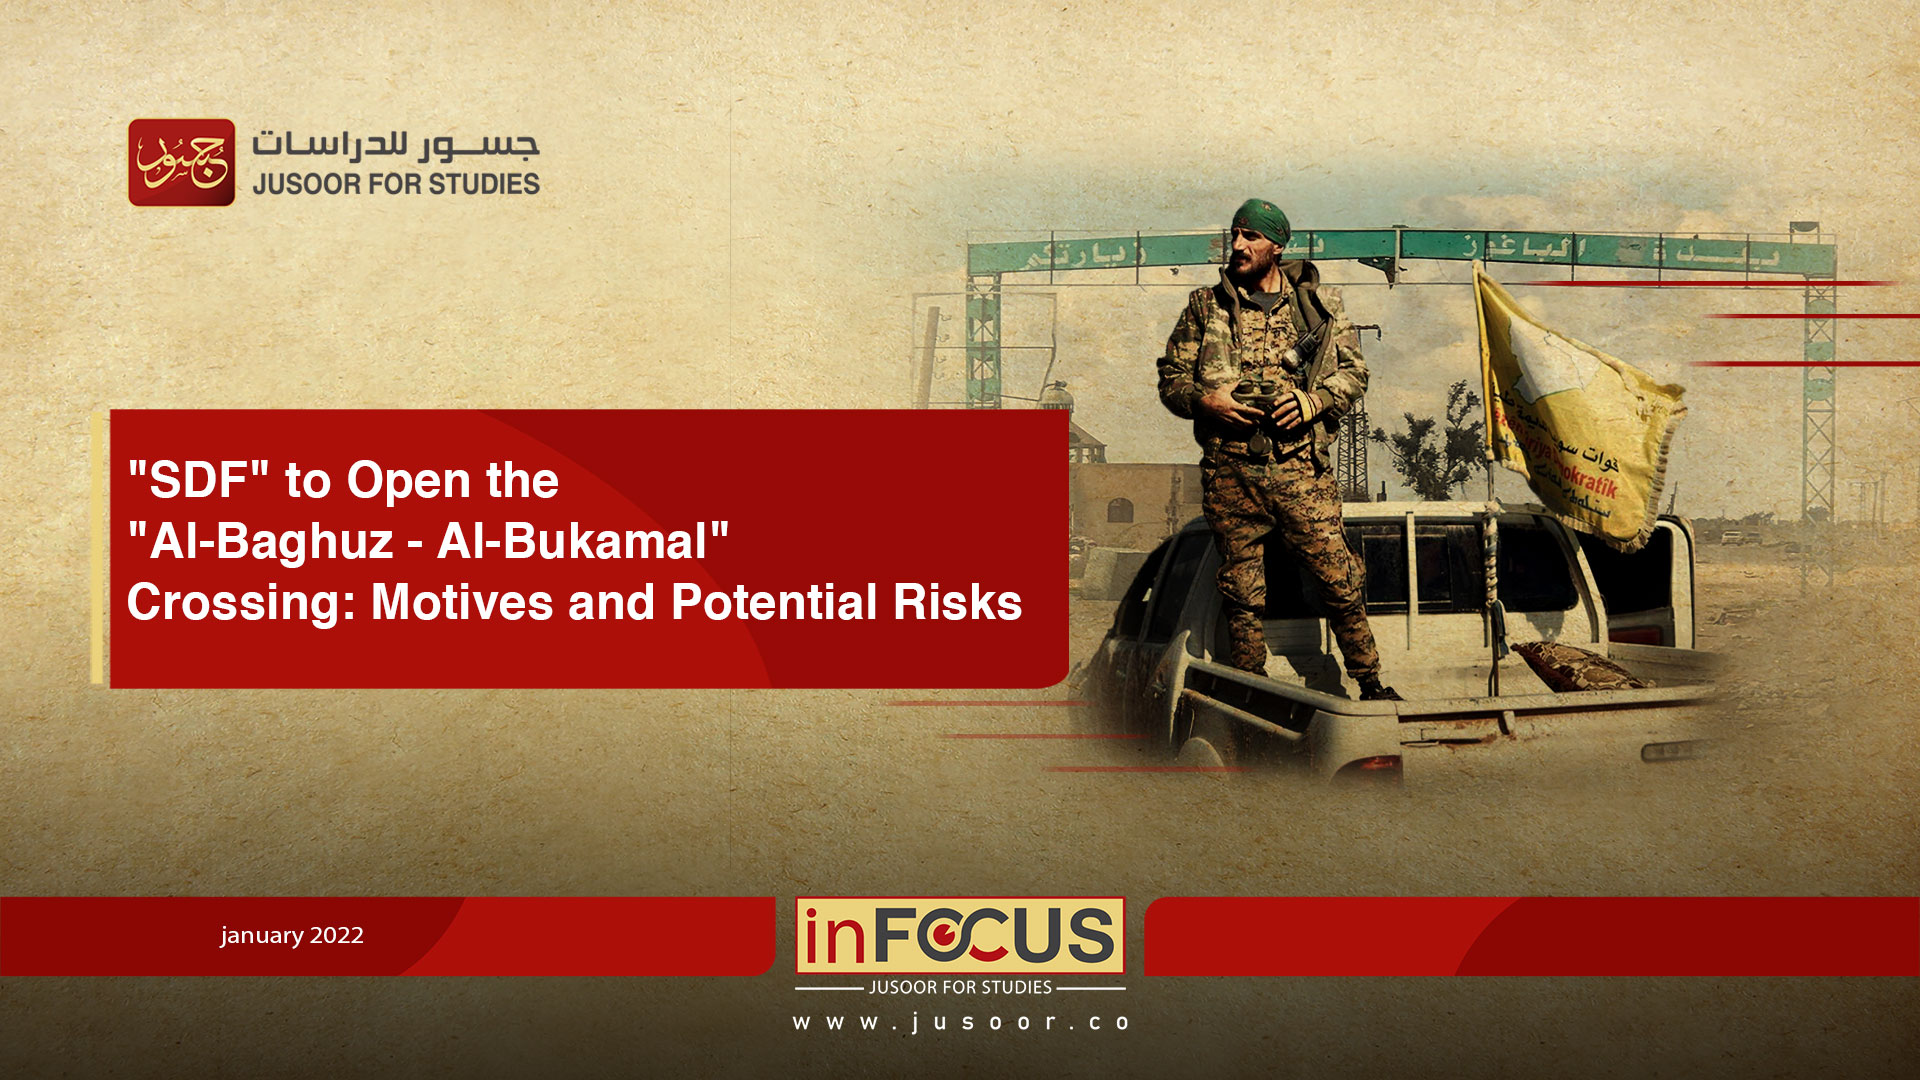 SDF" to Open the "Al-Baghuz - Al-Bukamal" Crossing: Motives and Potential Risks